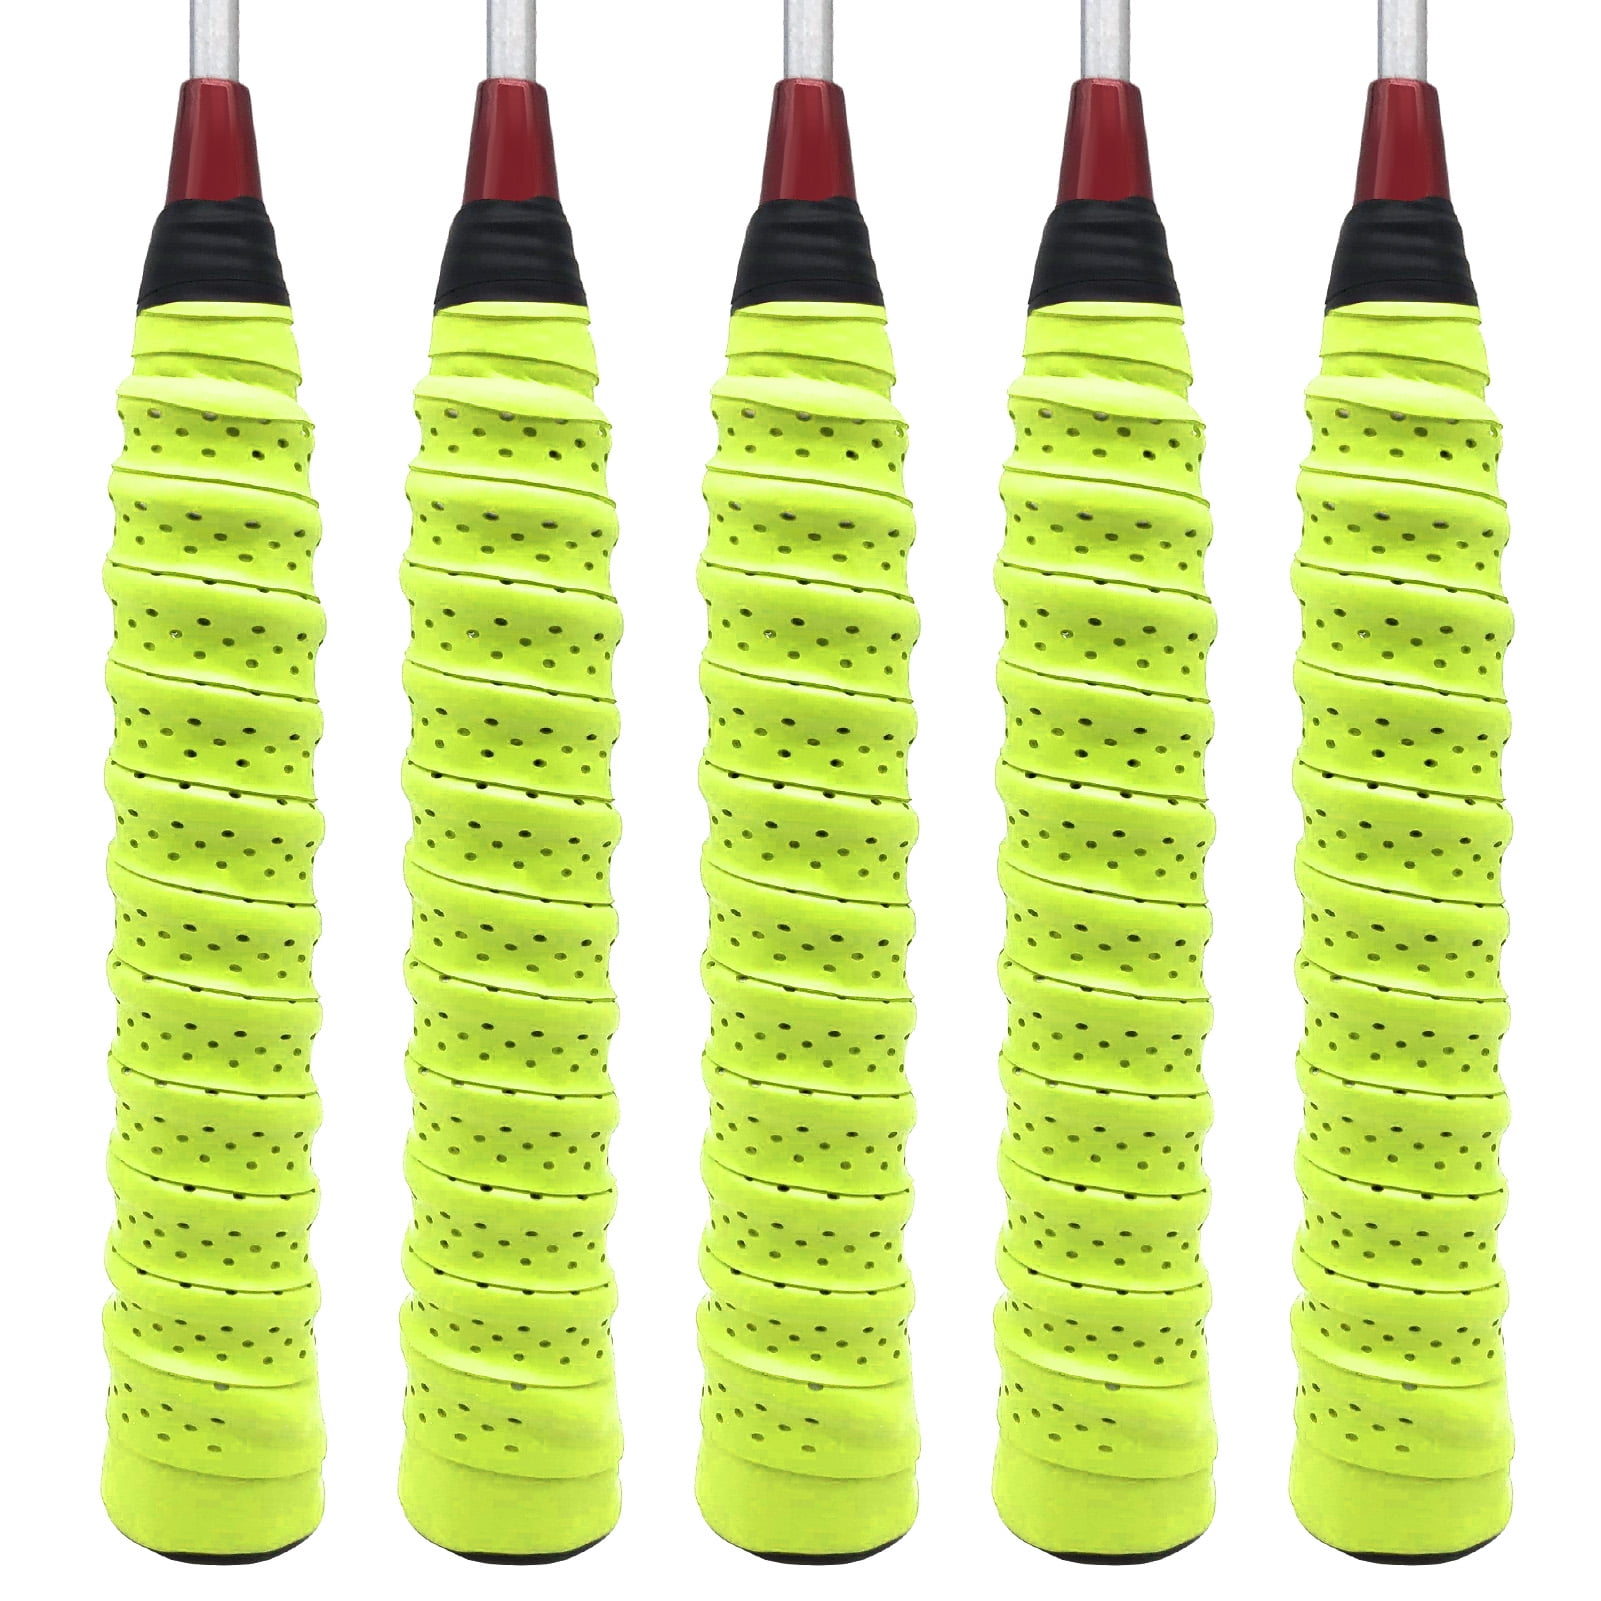 5pcs Mixed Colour YONEX Over Grip Badminton Racket Grip Tape Tennis Replacement 